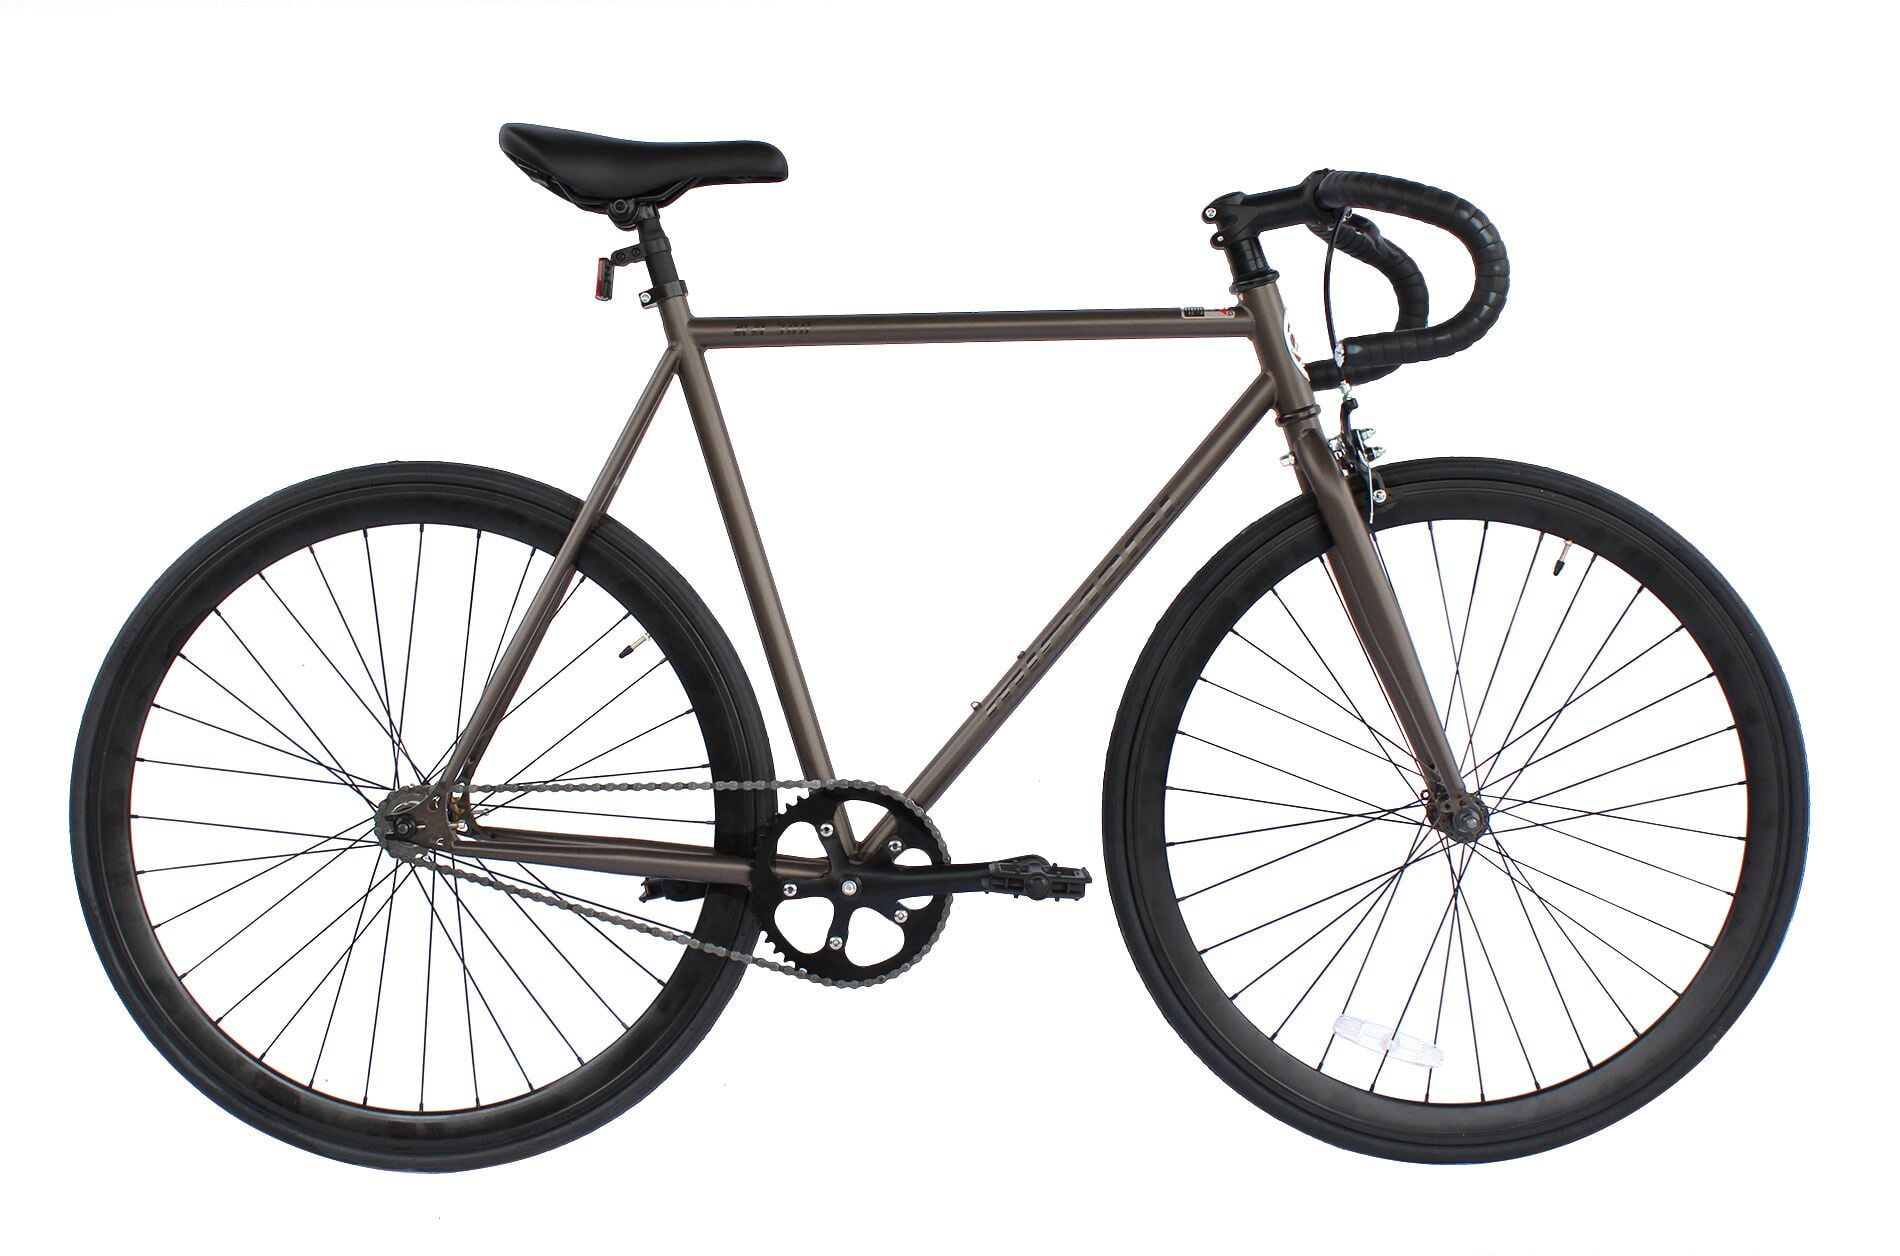 53 cm bike frame